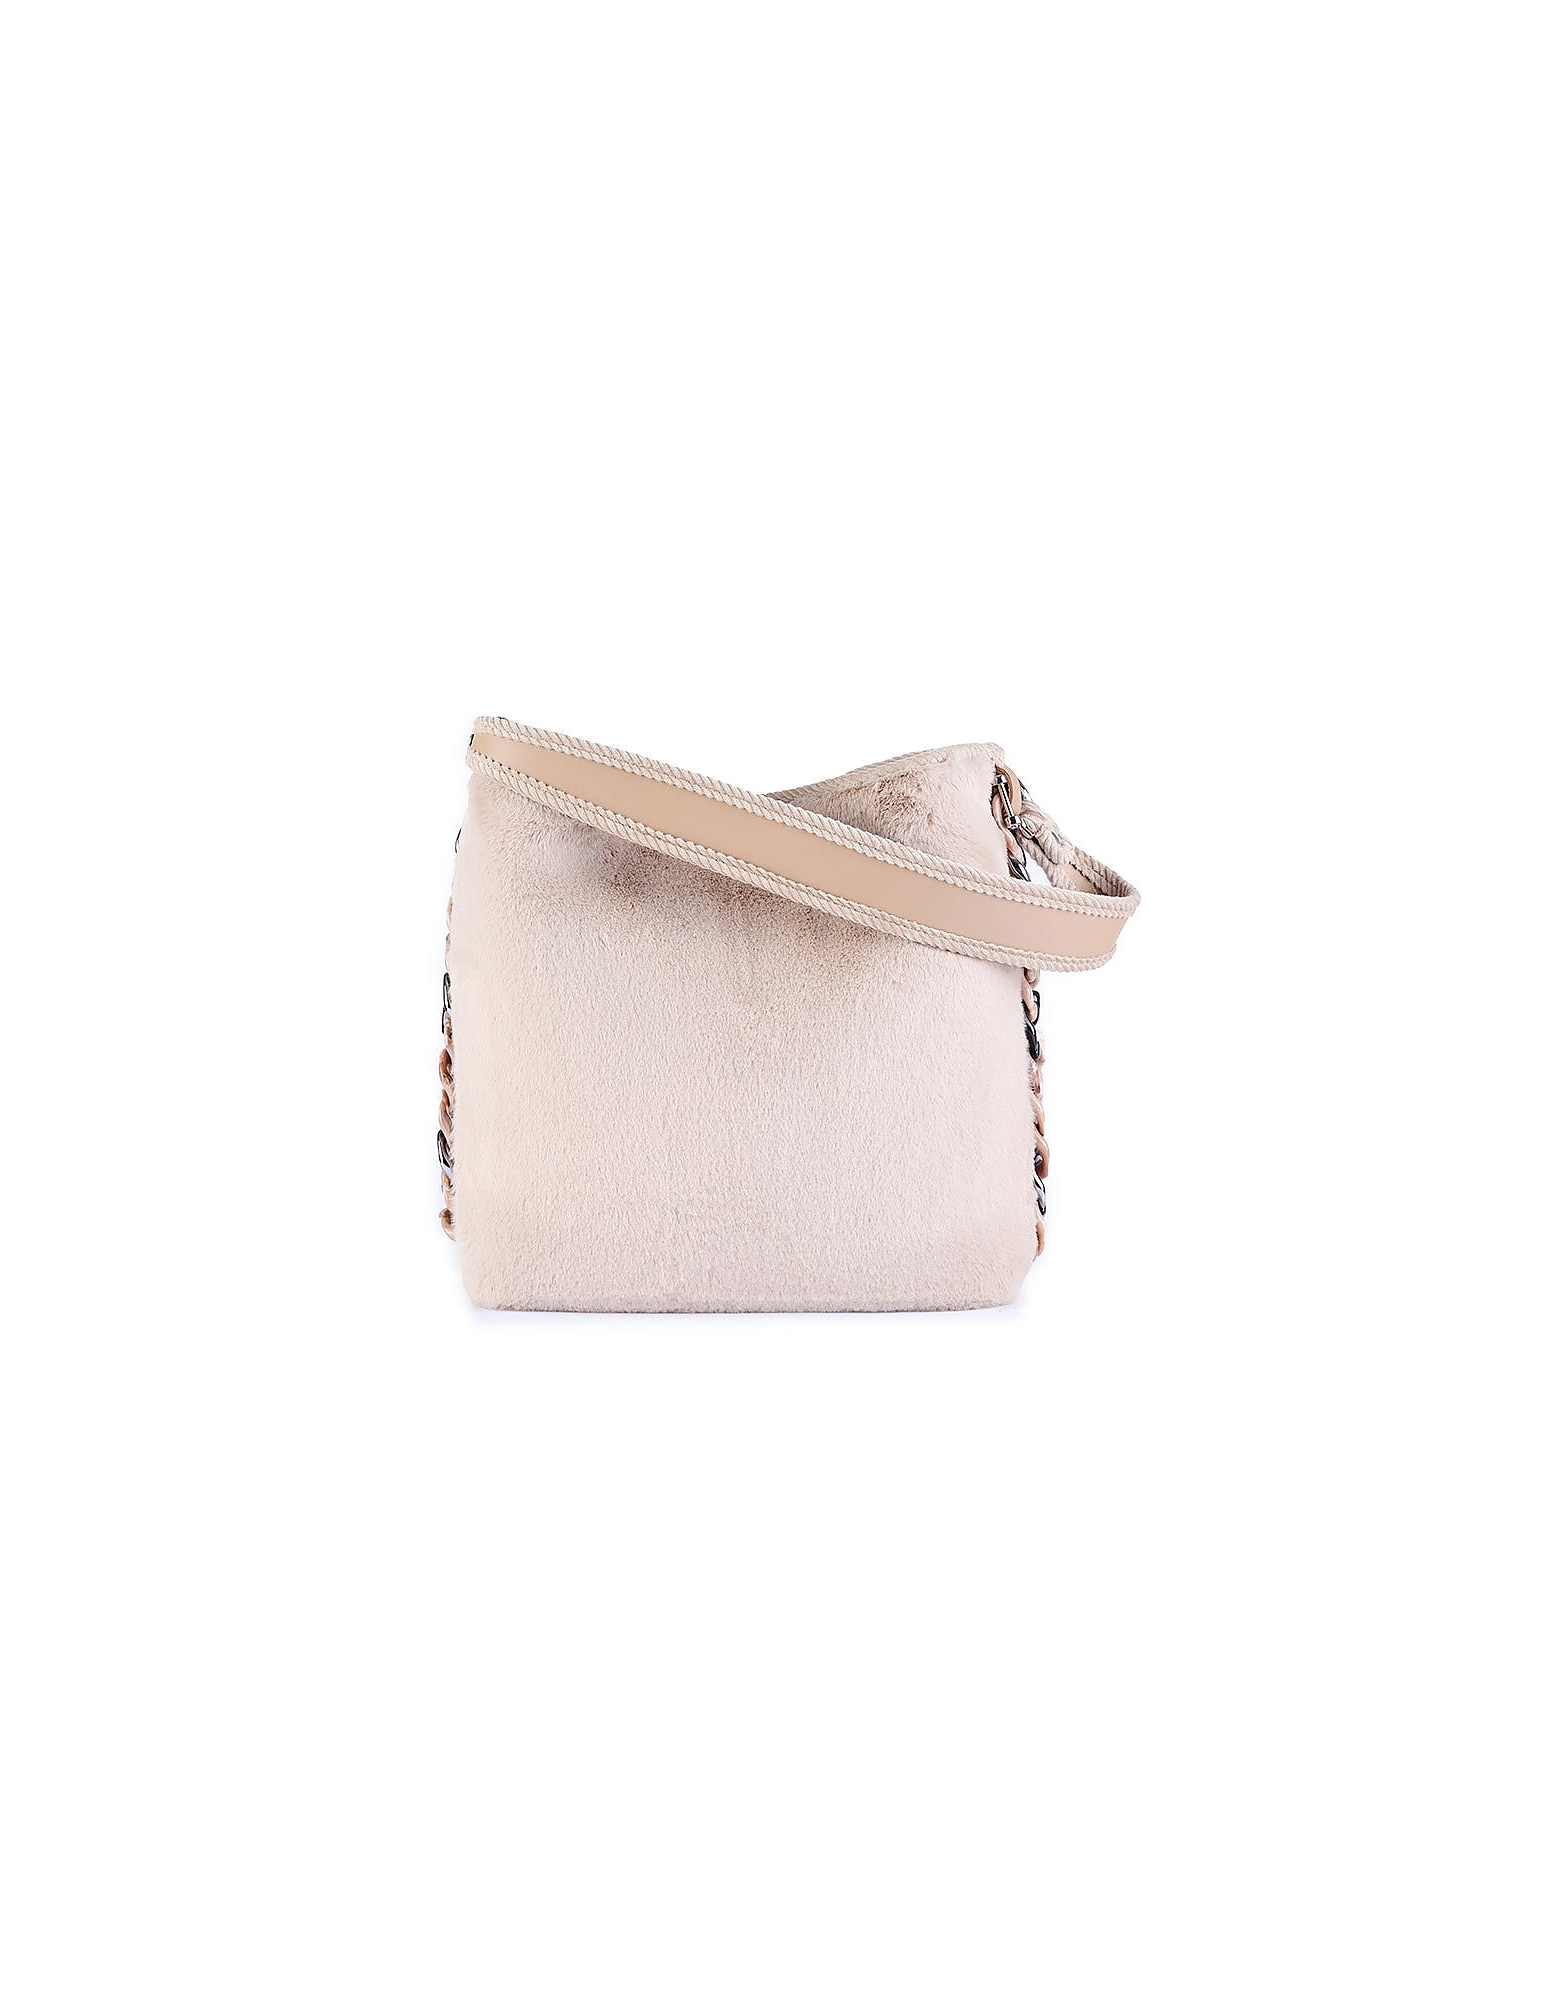 Viamailbag Designer Handbags Chamonix Fur - Eco-friendly Faux Fur Shoulder Bag In Blanc